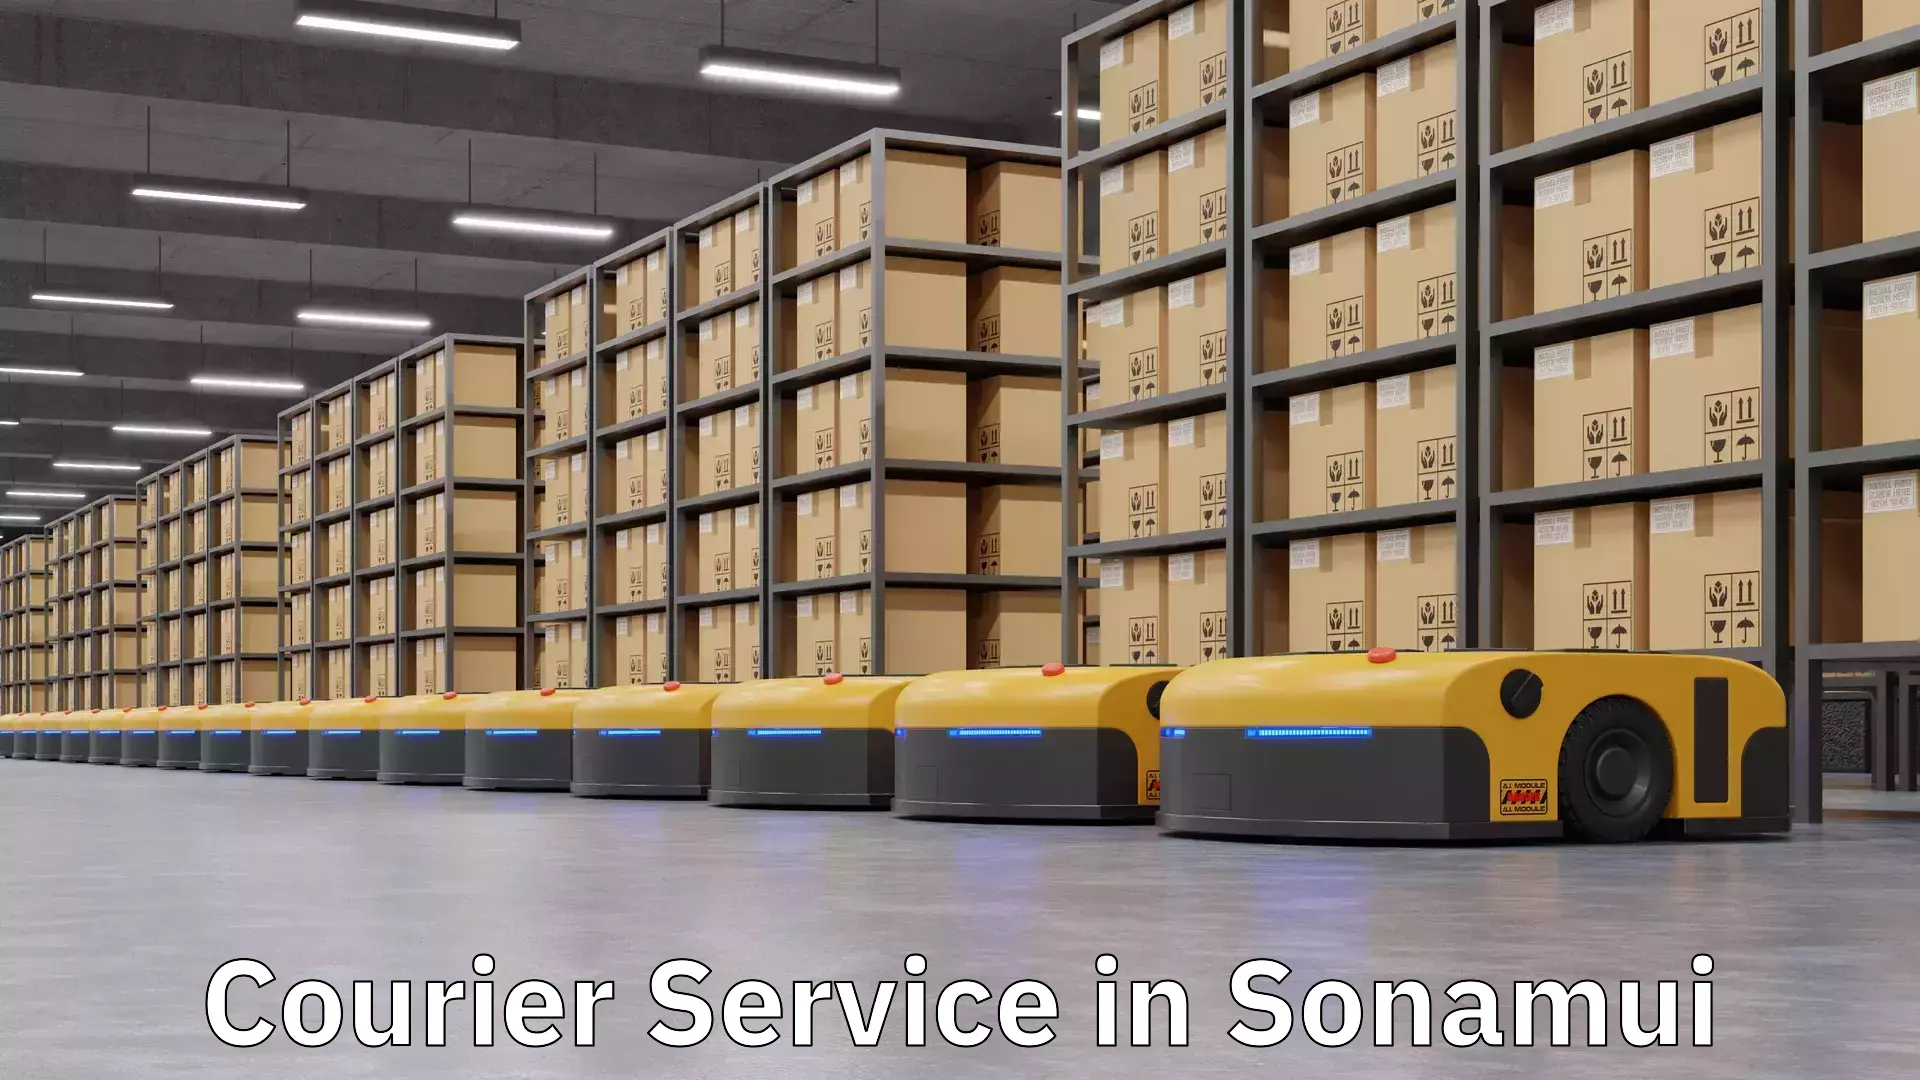 On-demand delivery in Sonamui